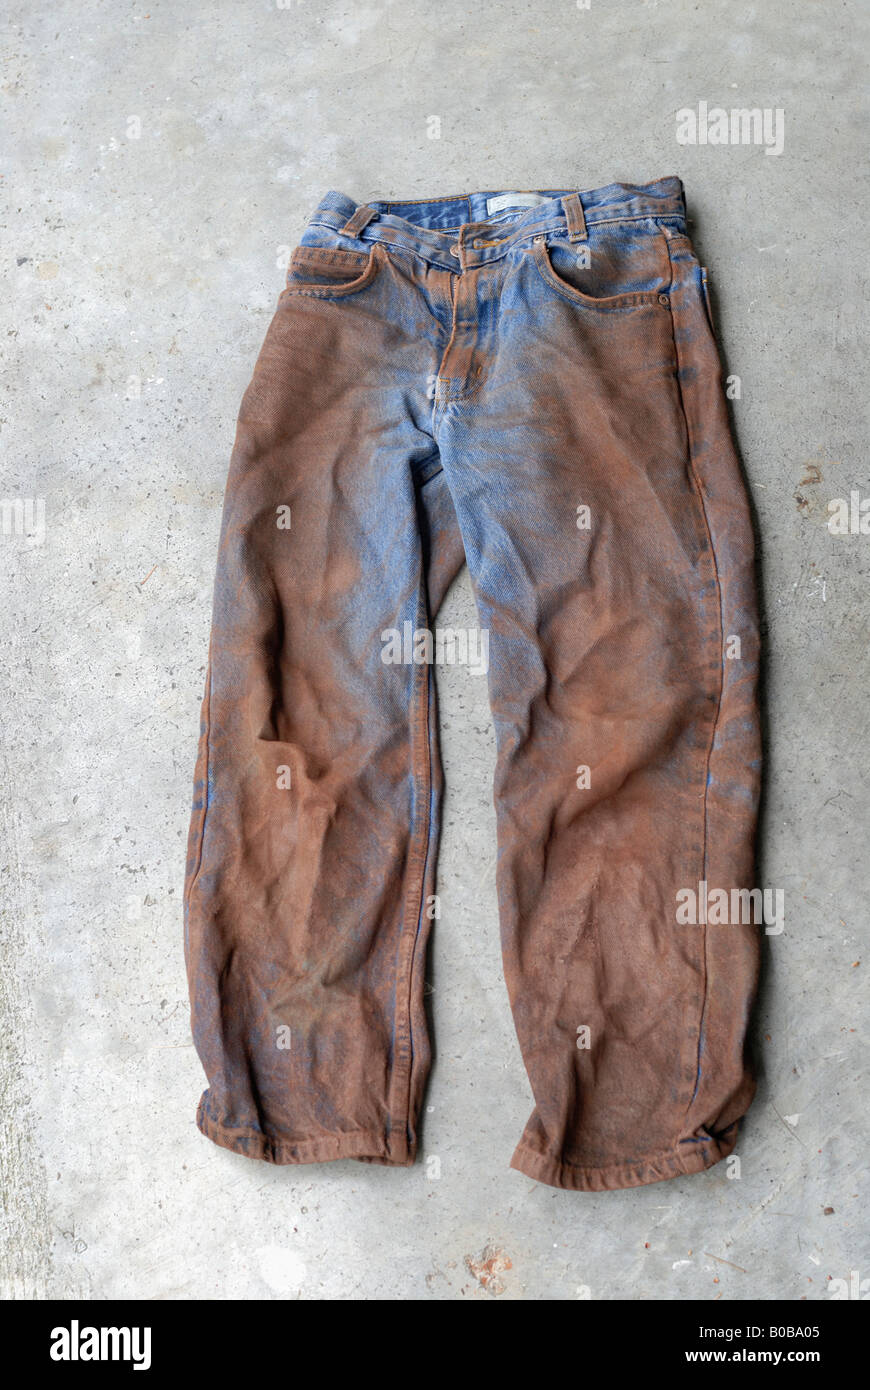 Boys dirty blue jeans Stock Photo - Alamy